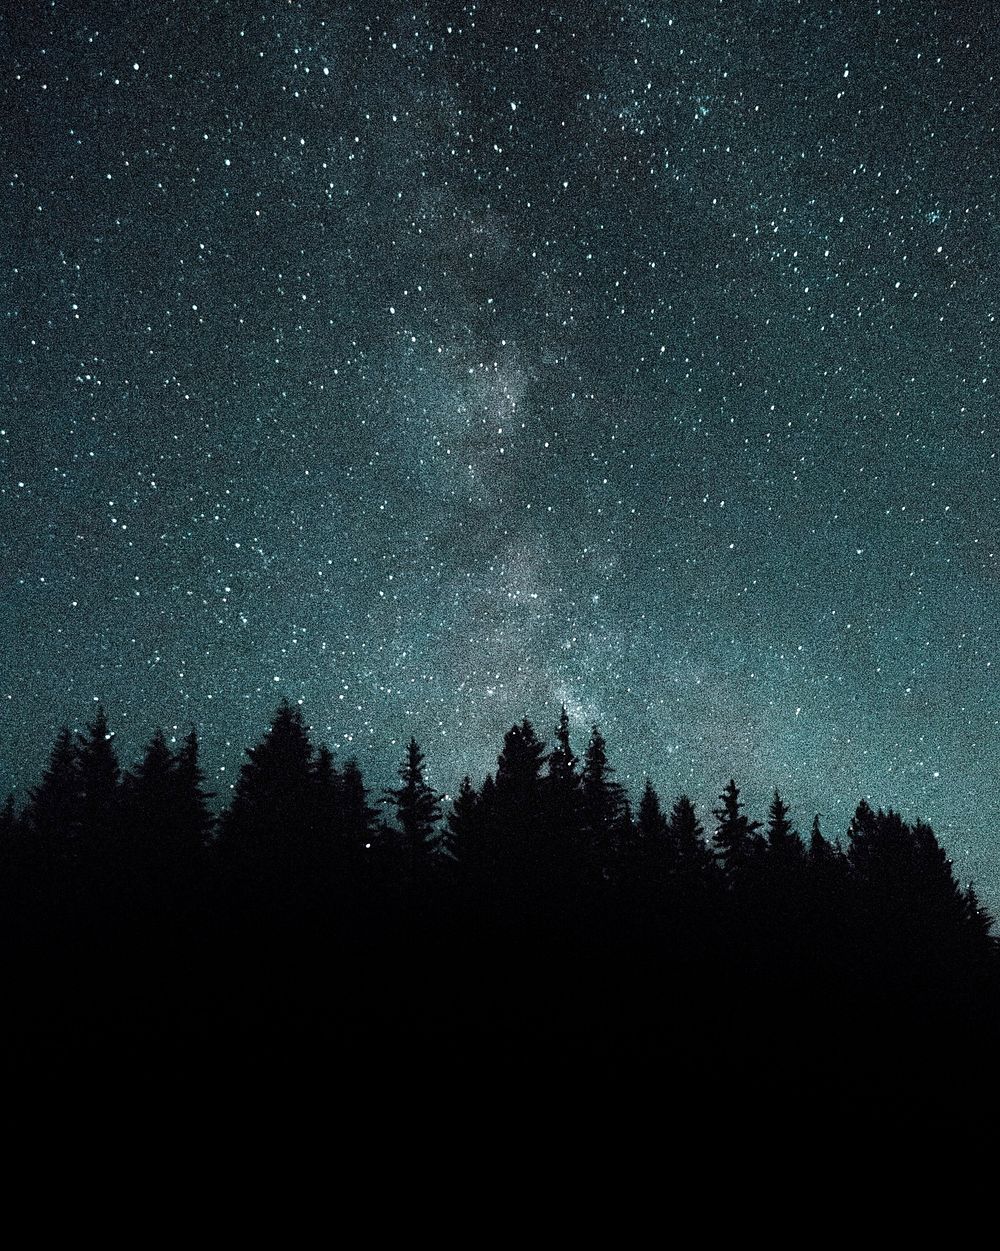 Free starry night, nature image, public domain scenery CC0 photo.